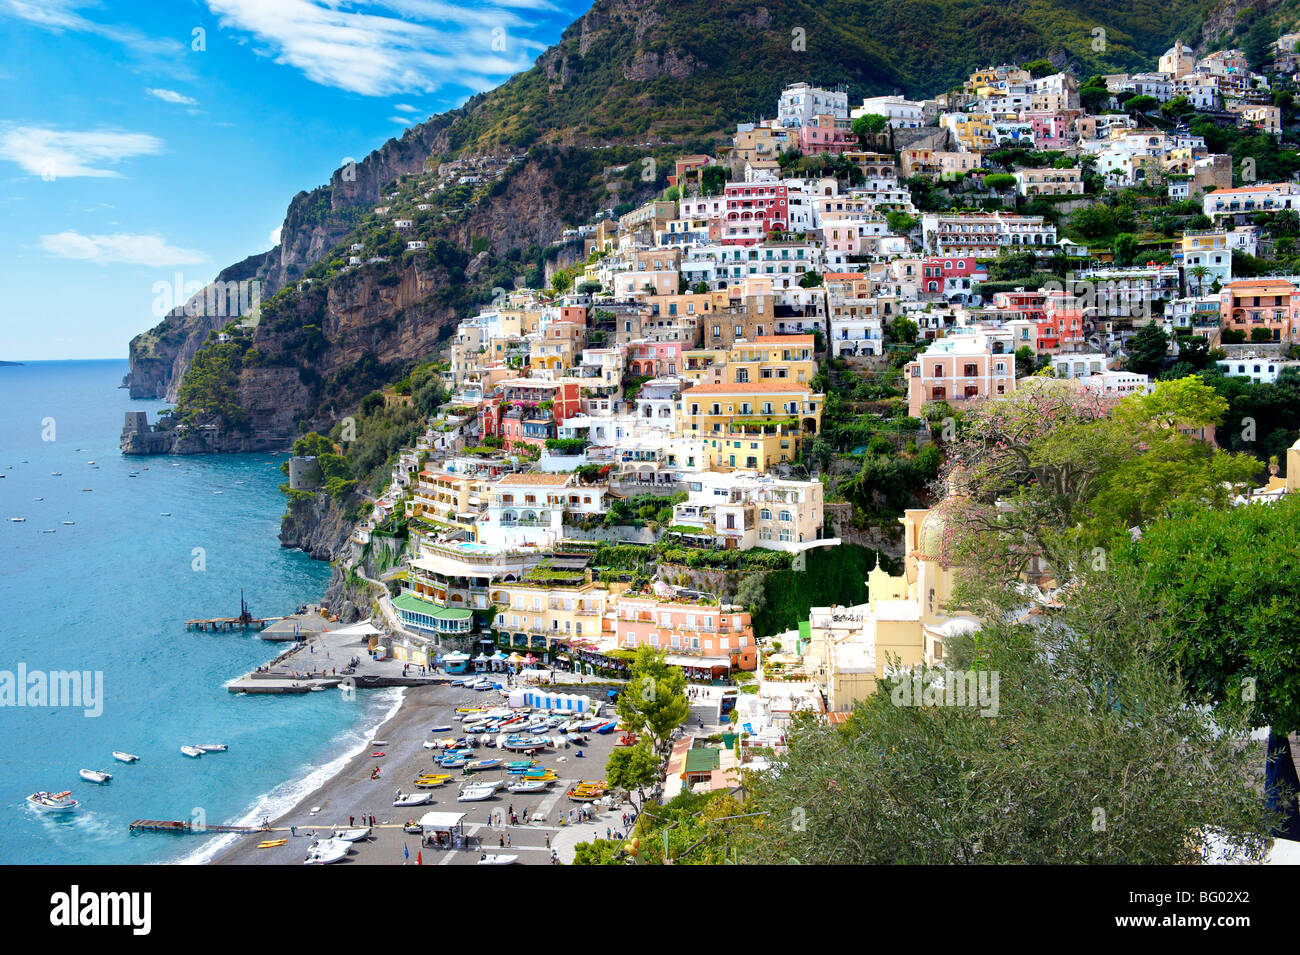 The fashionable resort of Positano, Amalfi coast, Italy Stock Photo